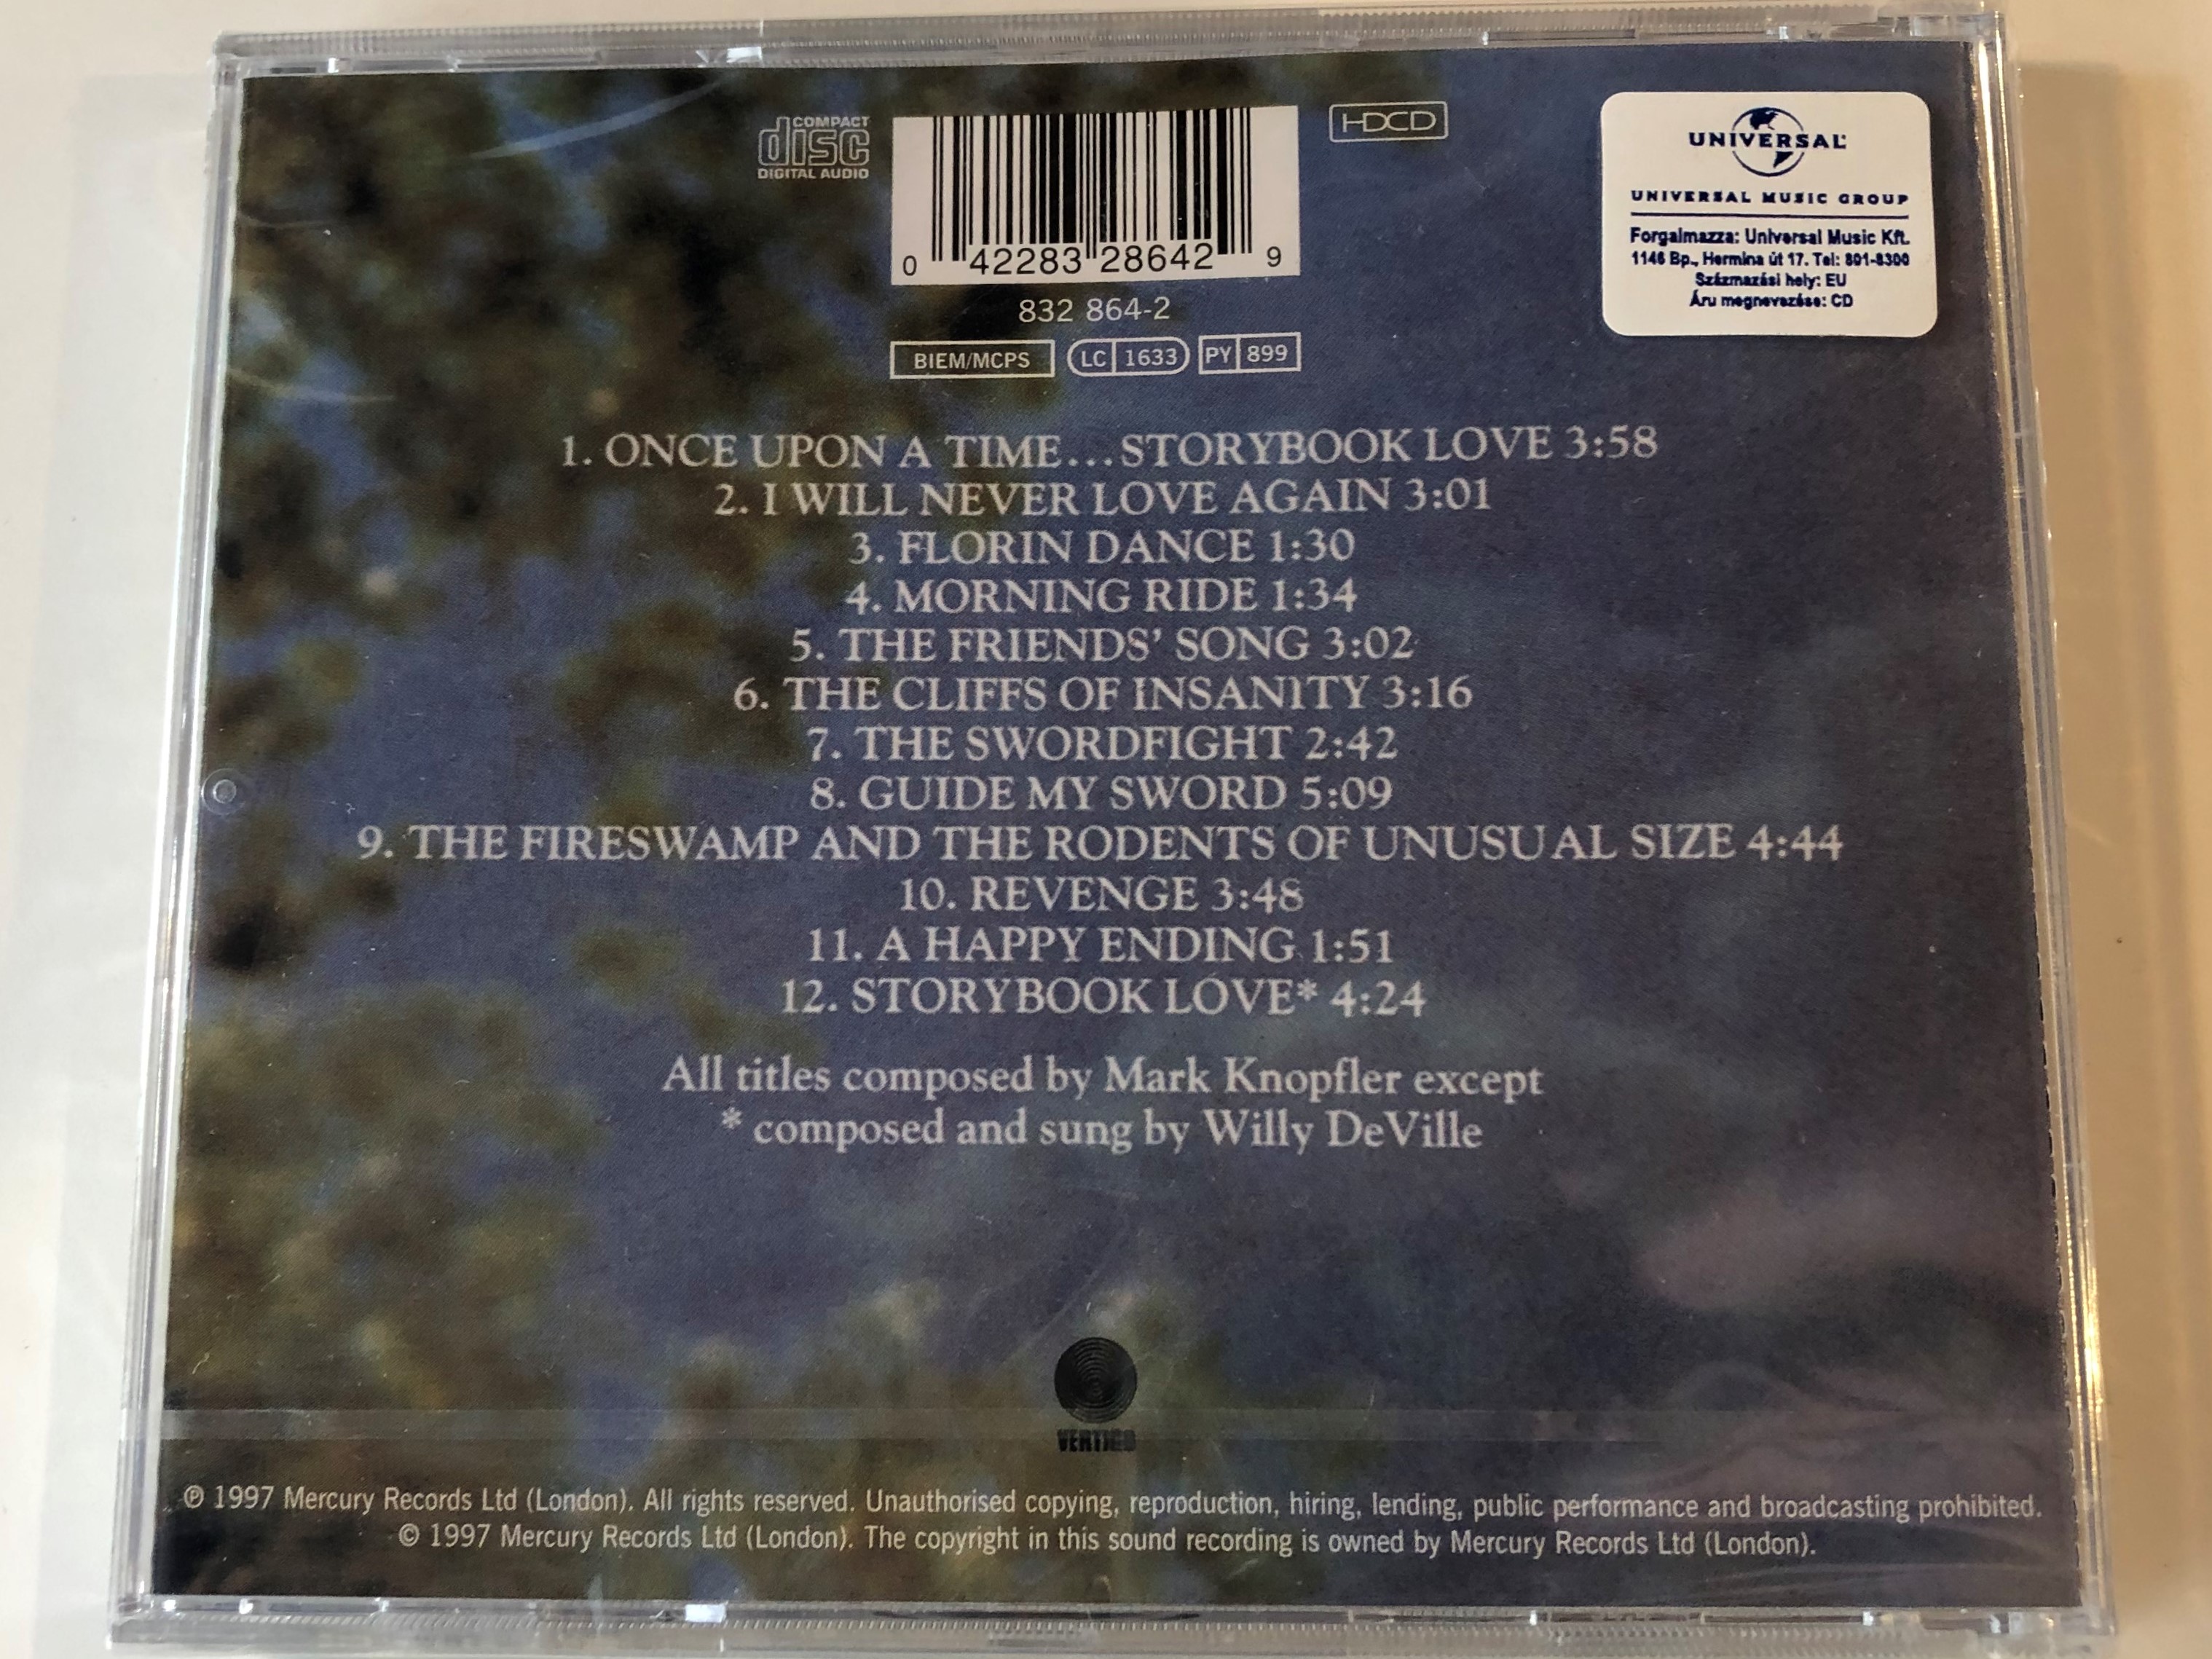 music-by-mark-knopfler-the-princess-bride-mercury-records-ltd.-audio-cd-1997-832-864-2-2-.jpg